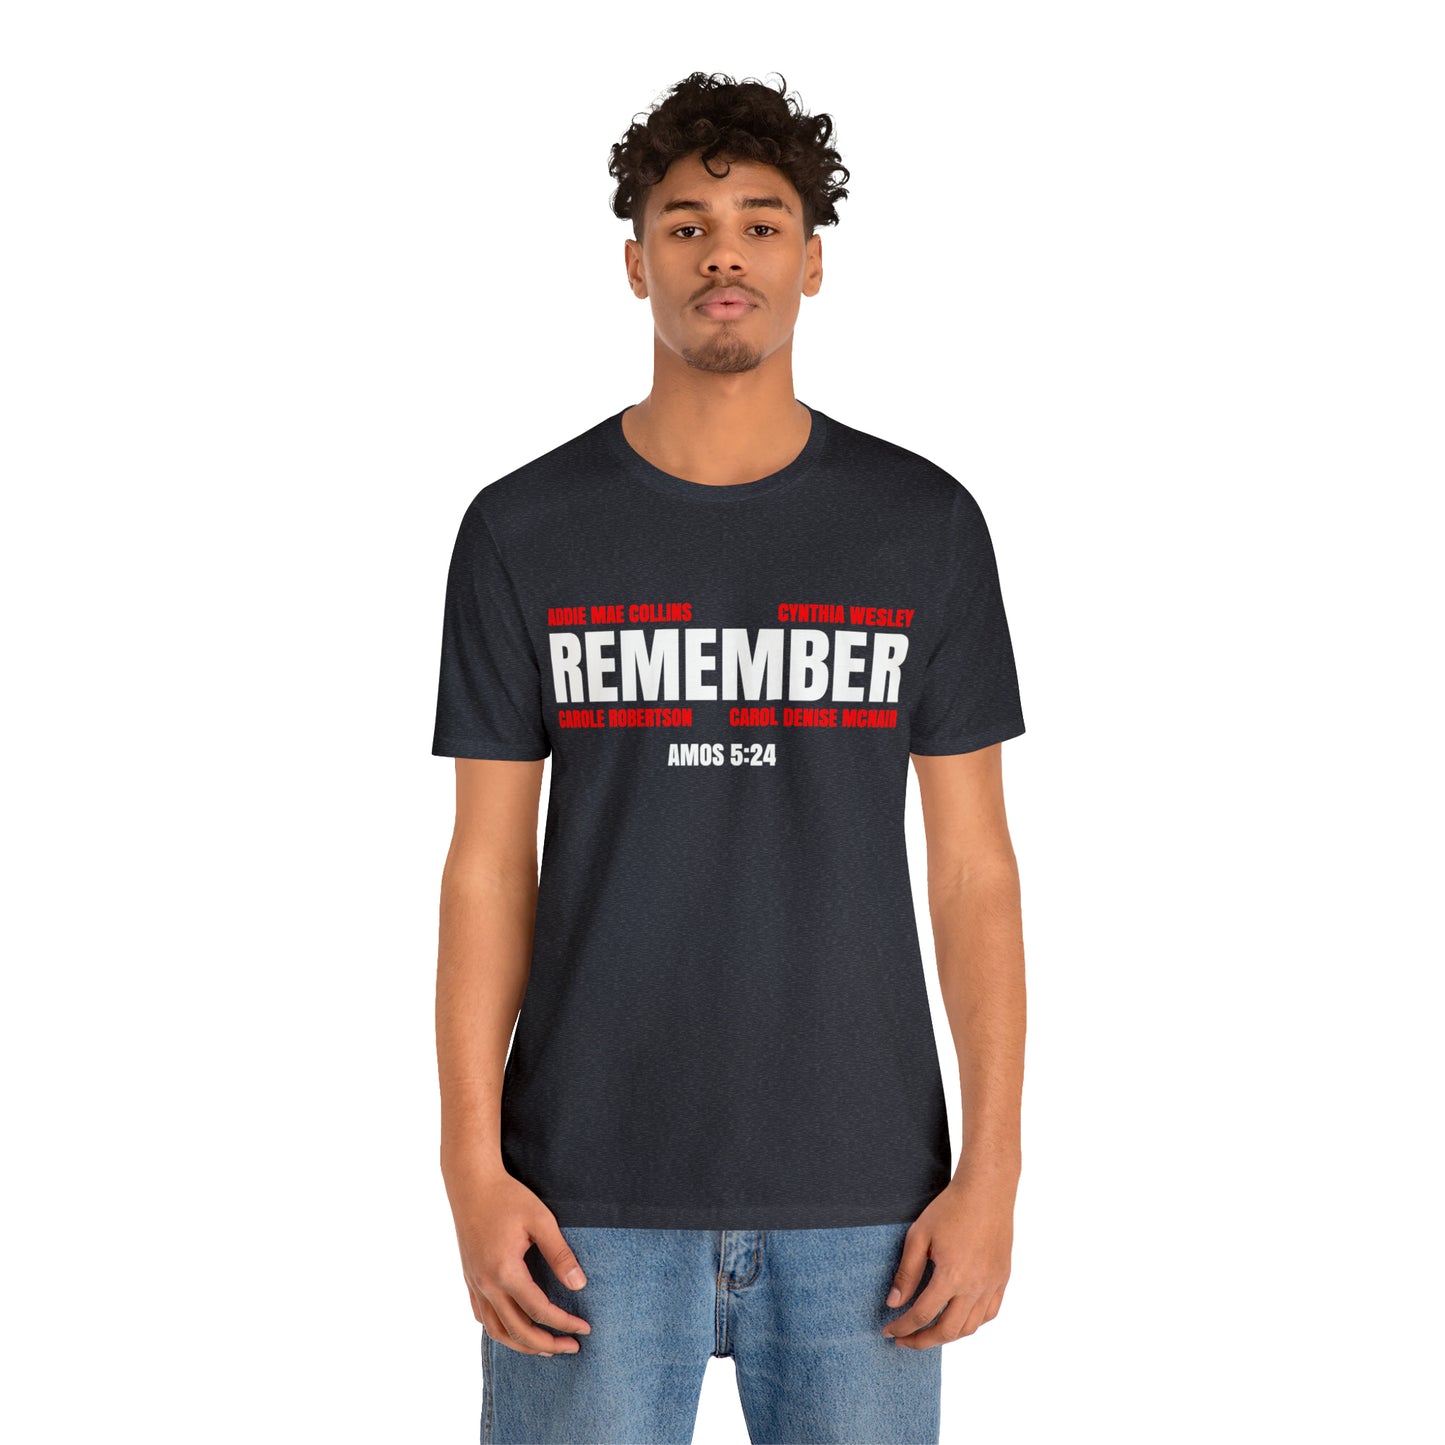 The Remember Series-16th Street Baptist Church Bombing-Unisex Jersey Short Sleeve Tee